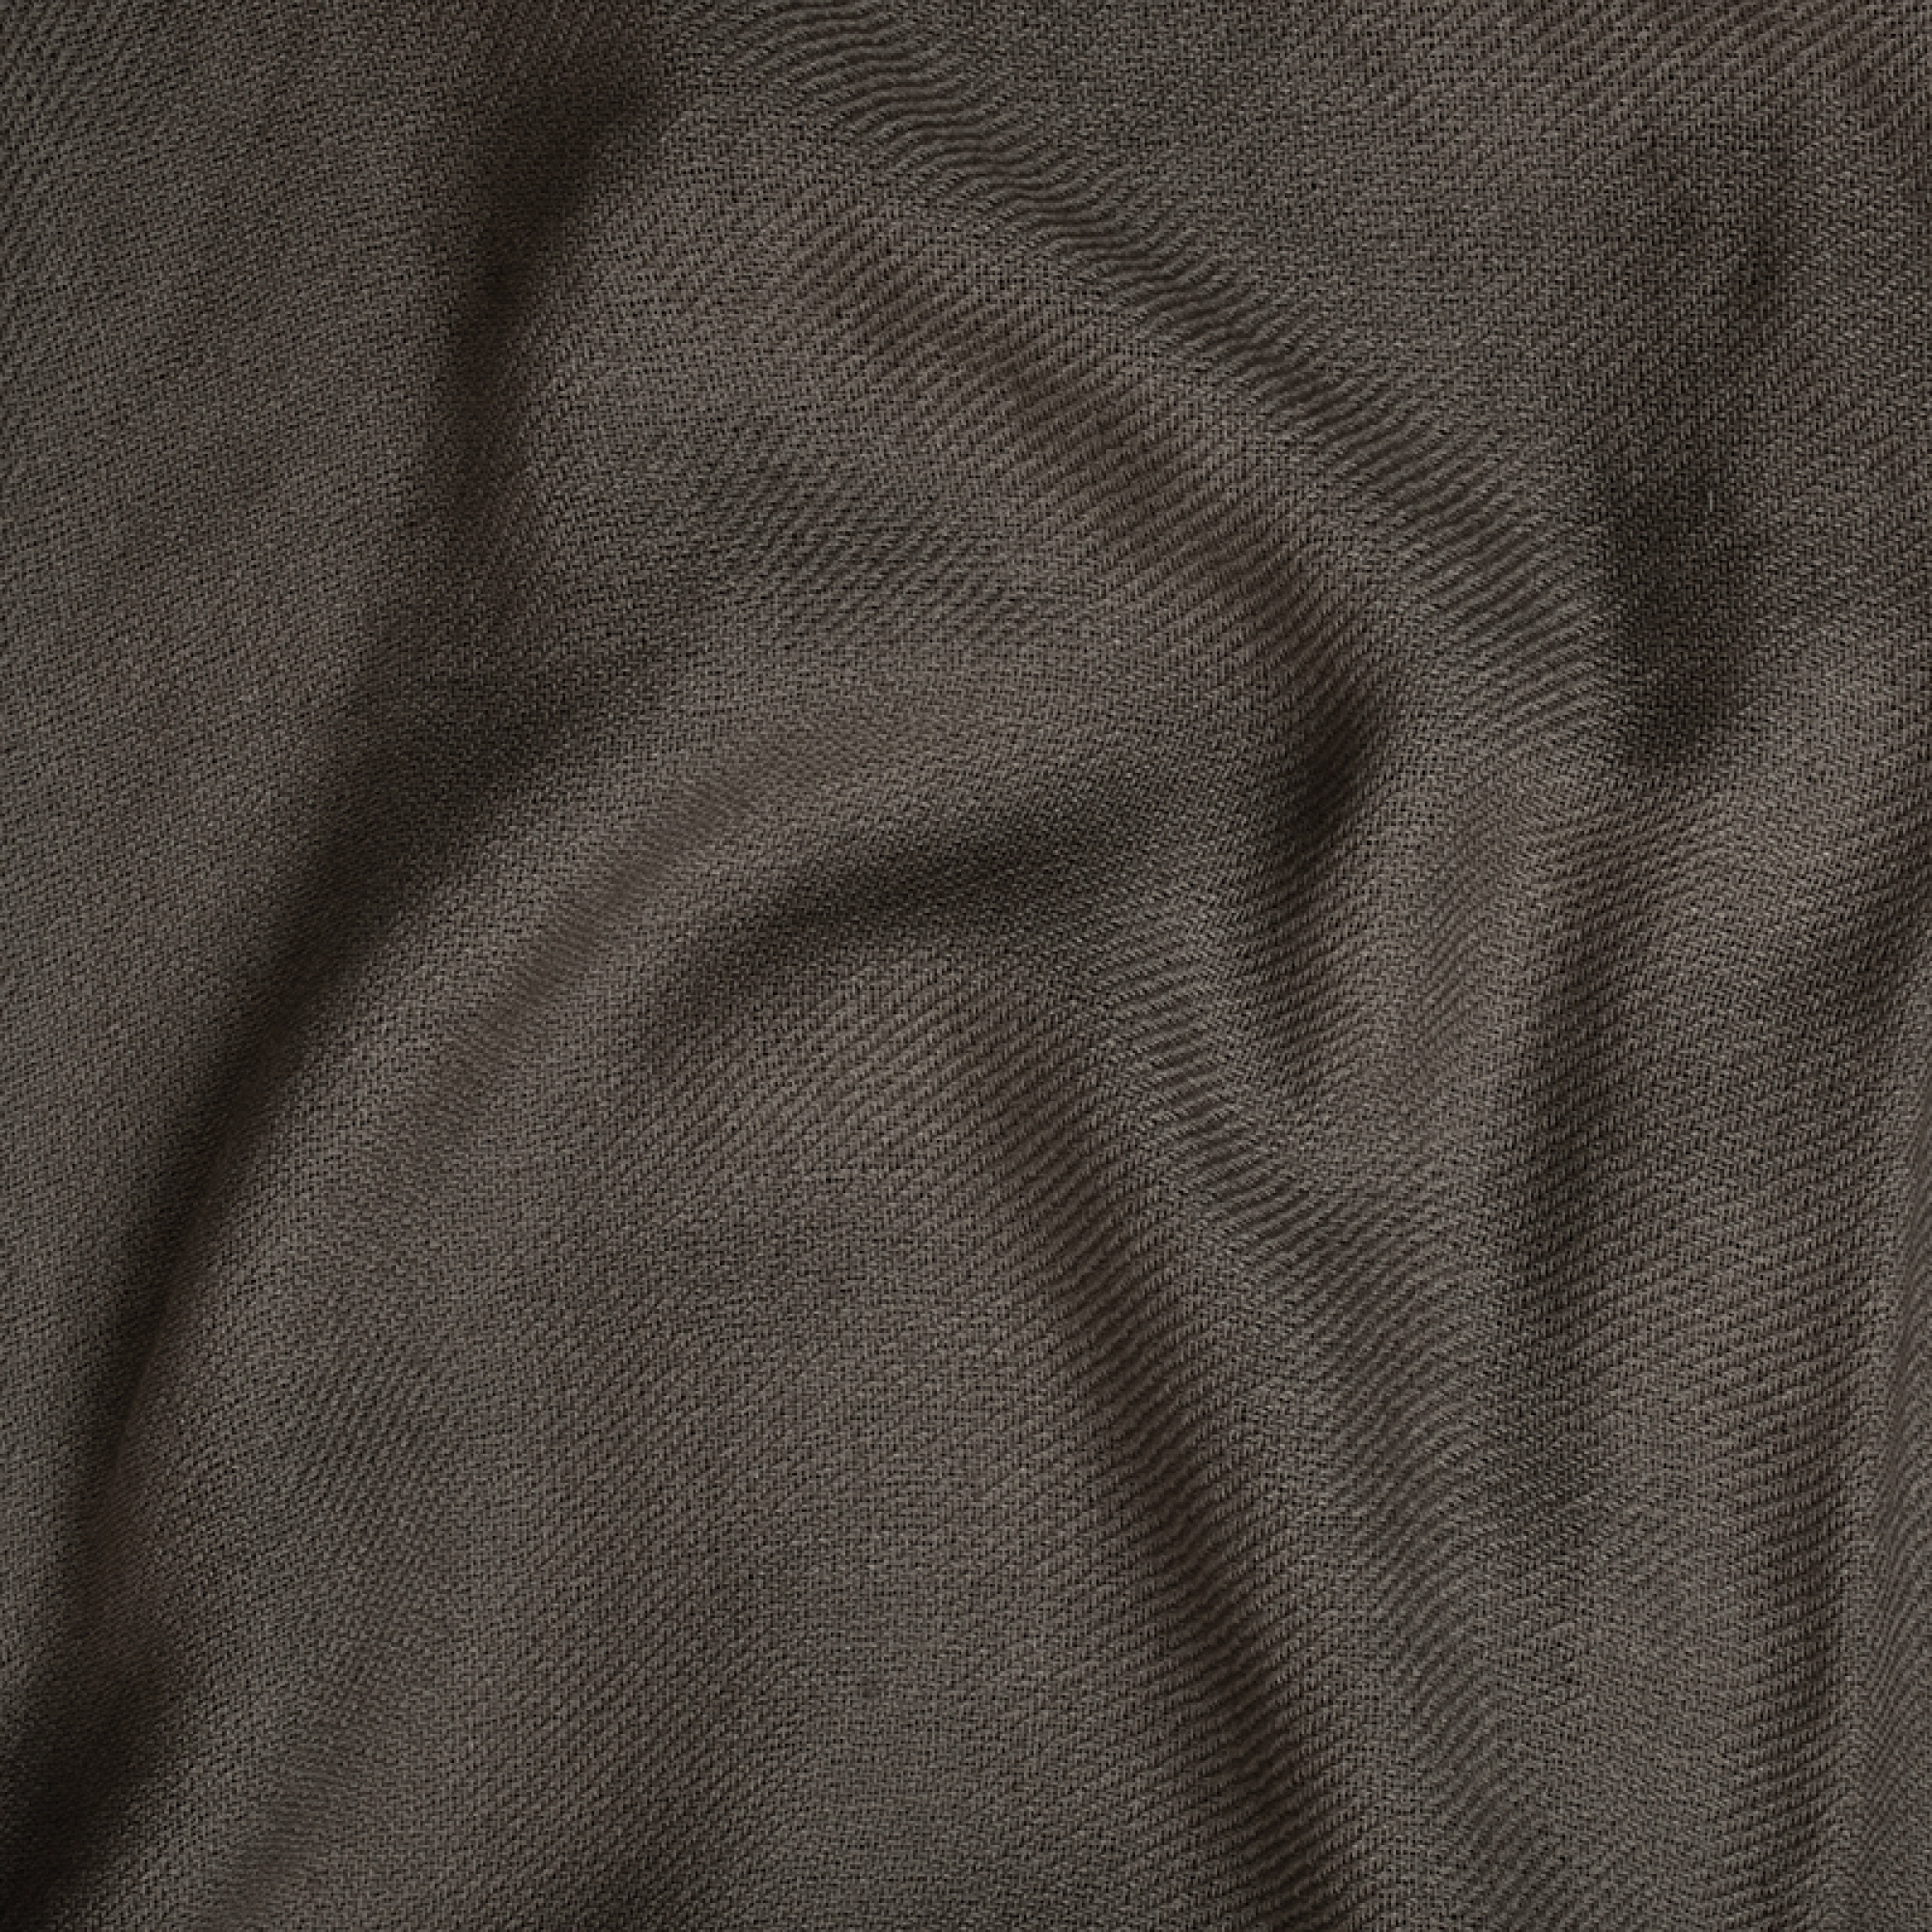 Cashmere accessories blanket toodoo plain xl 240 x 260 chestnut 240 x 260 cm